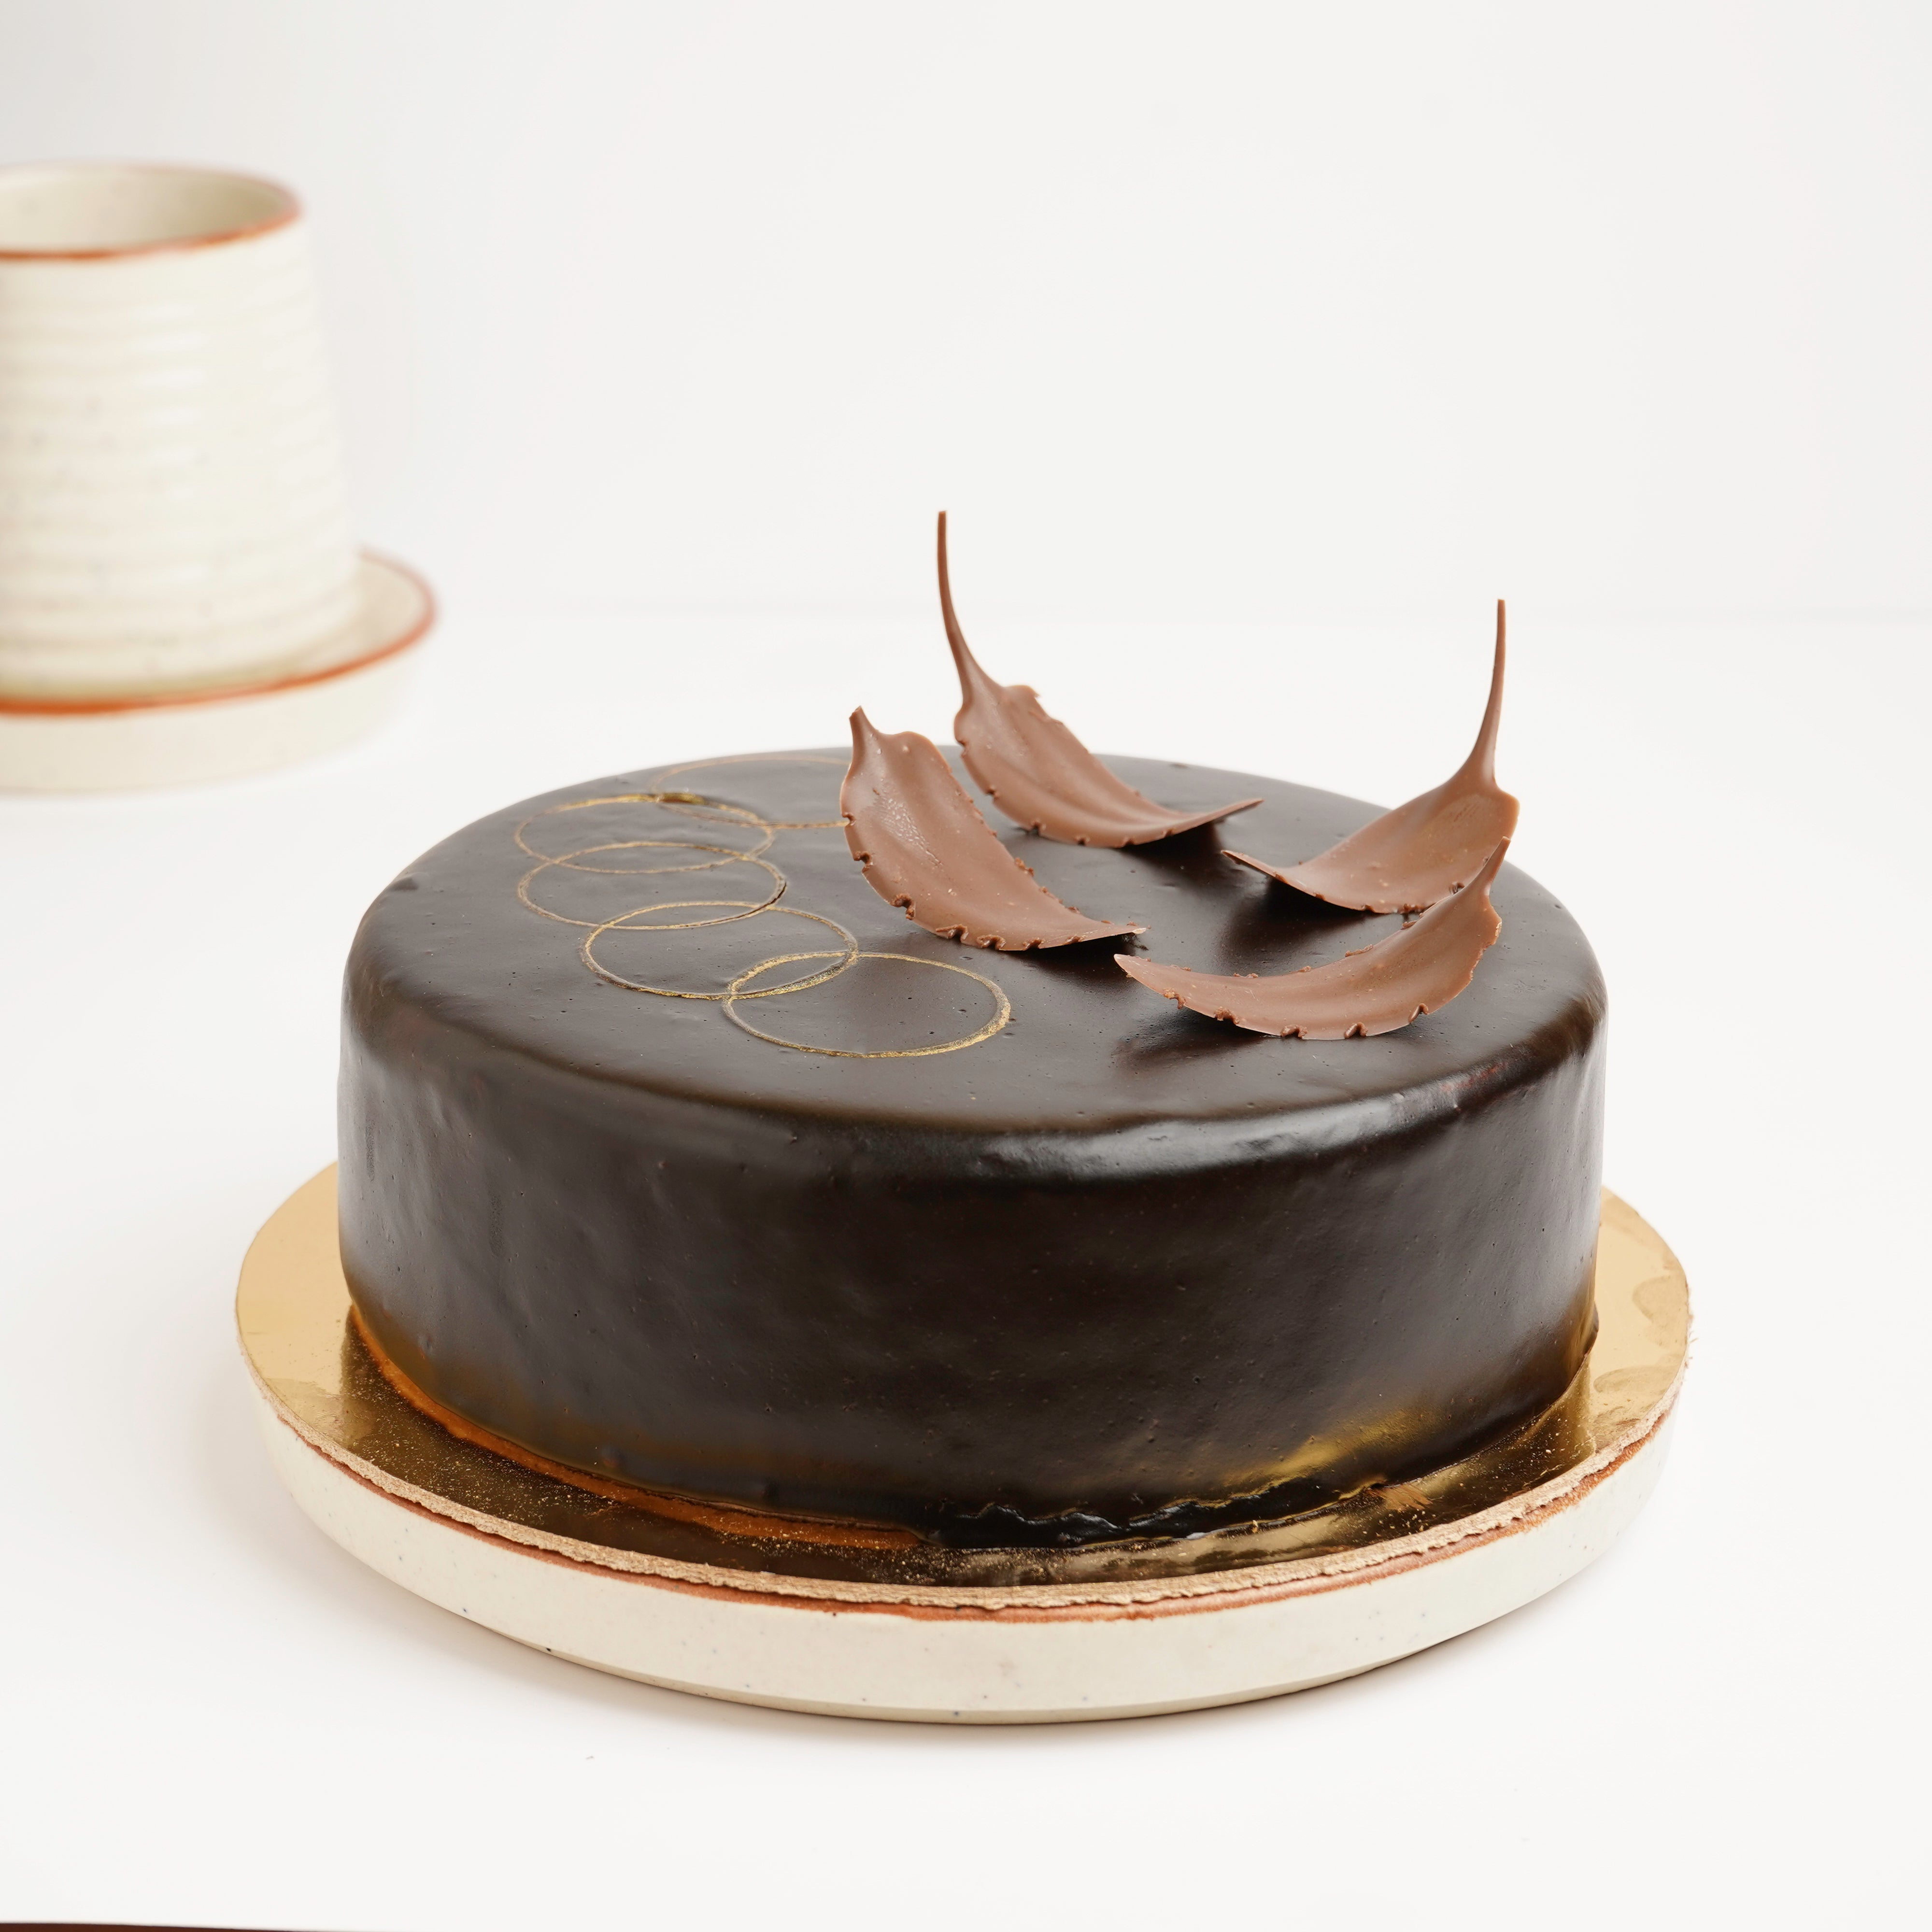 Oreo Chocolate Cake Recipe - OMG Chocolate Desserts